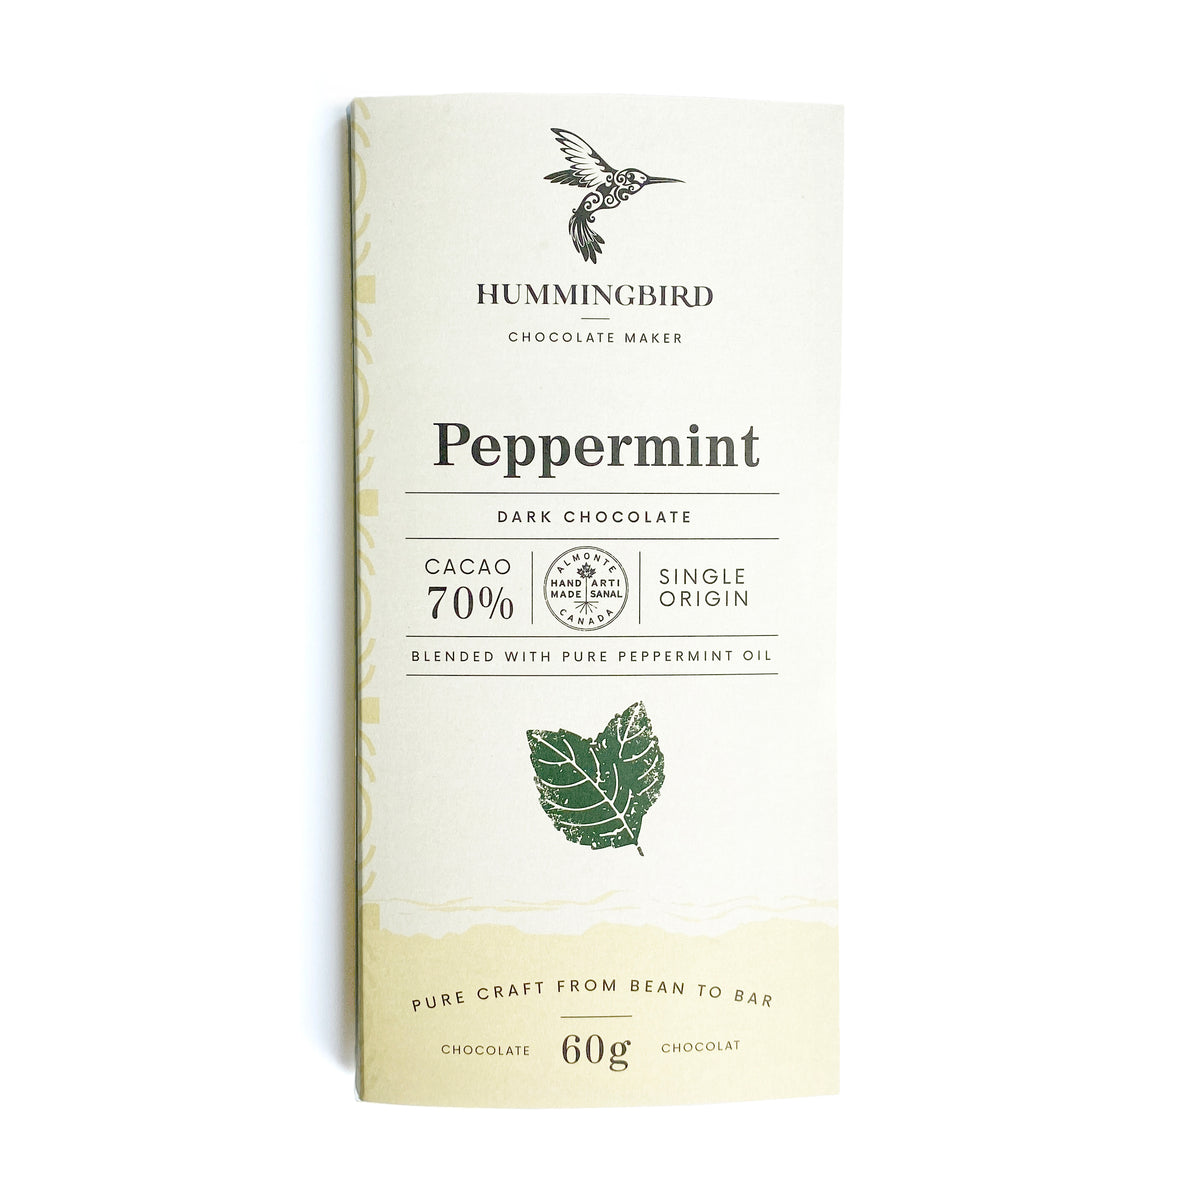 Hummingbird Chocolate Maker, Peppermint, 70% Cacao, dark chocolate, 60g bar.